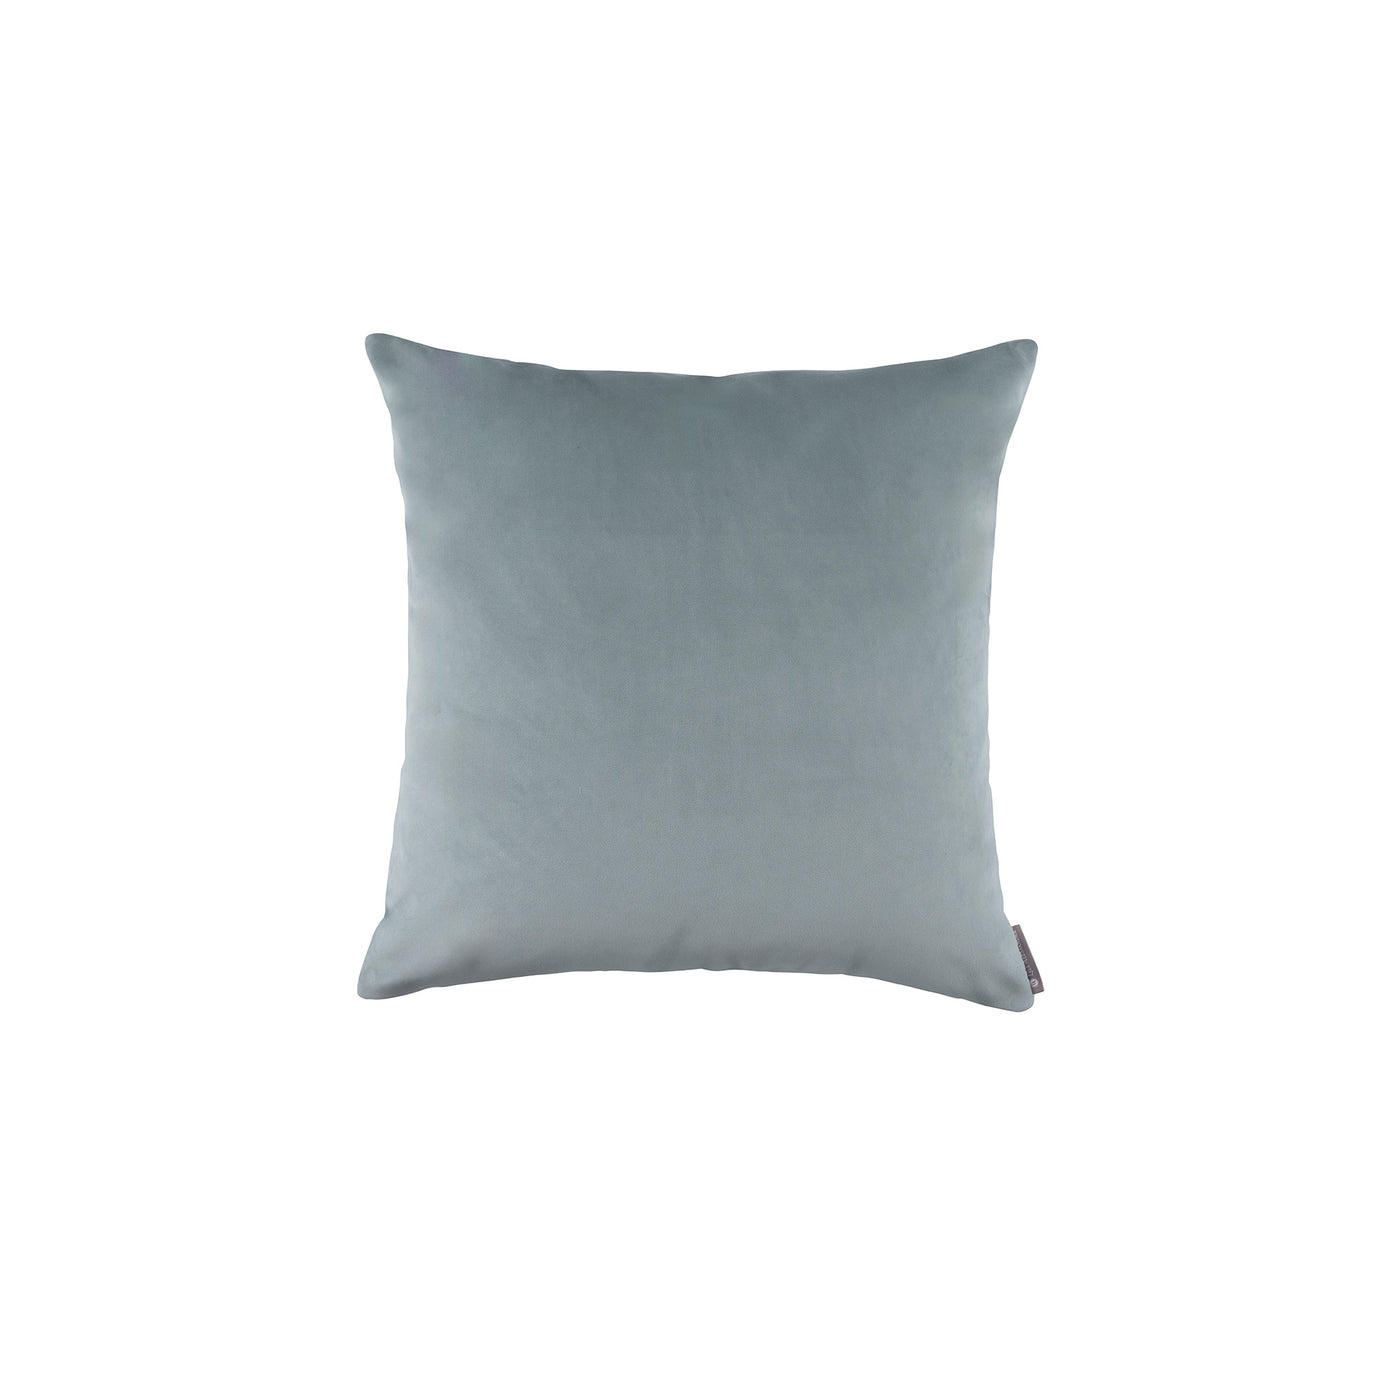 Vivid Mist Medium Square Pillow (24x24)